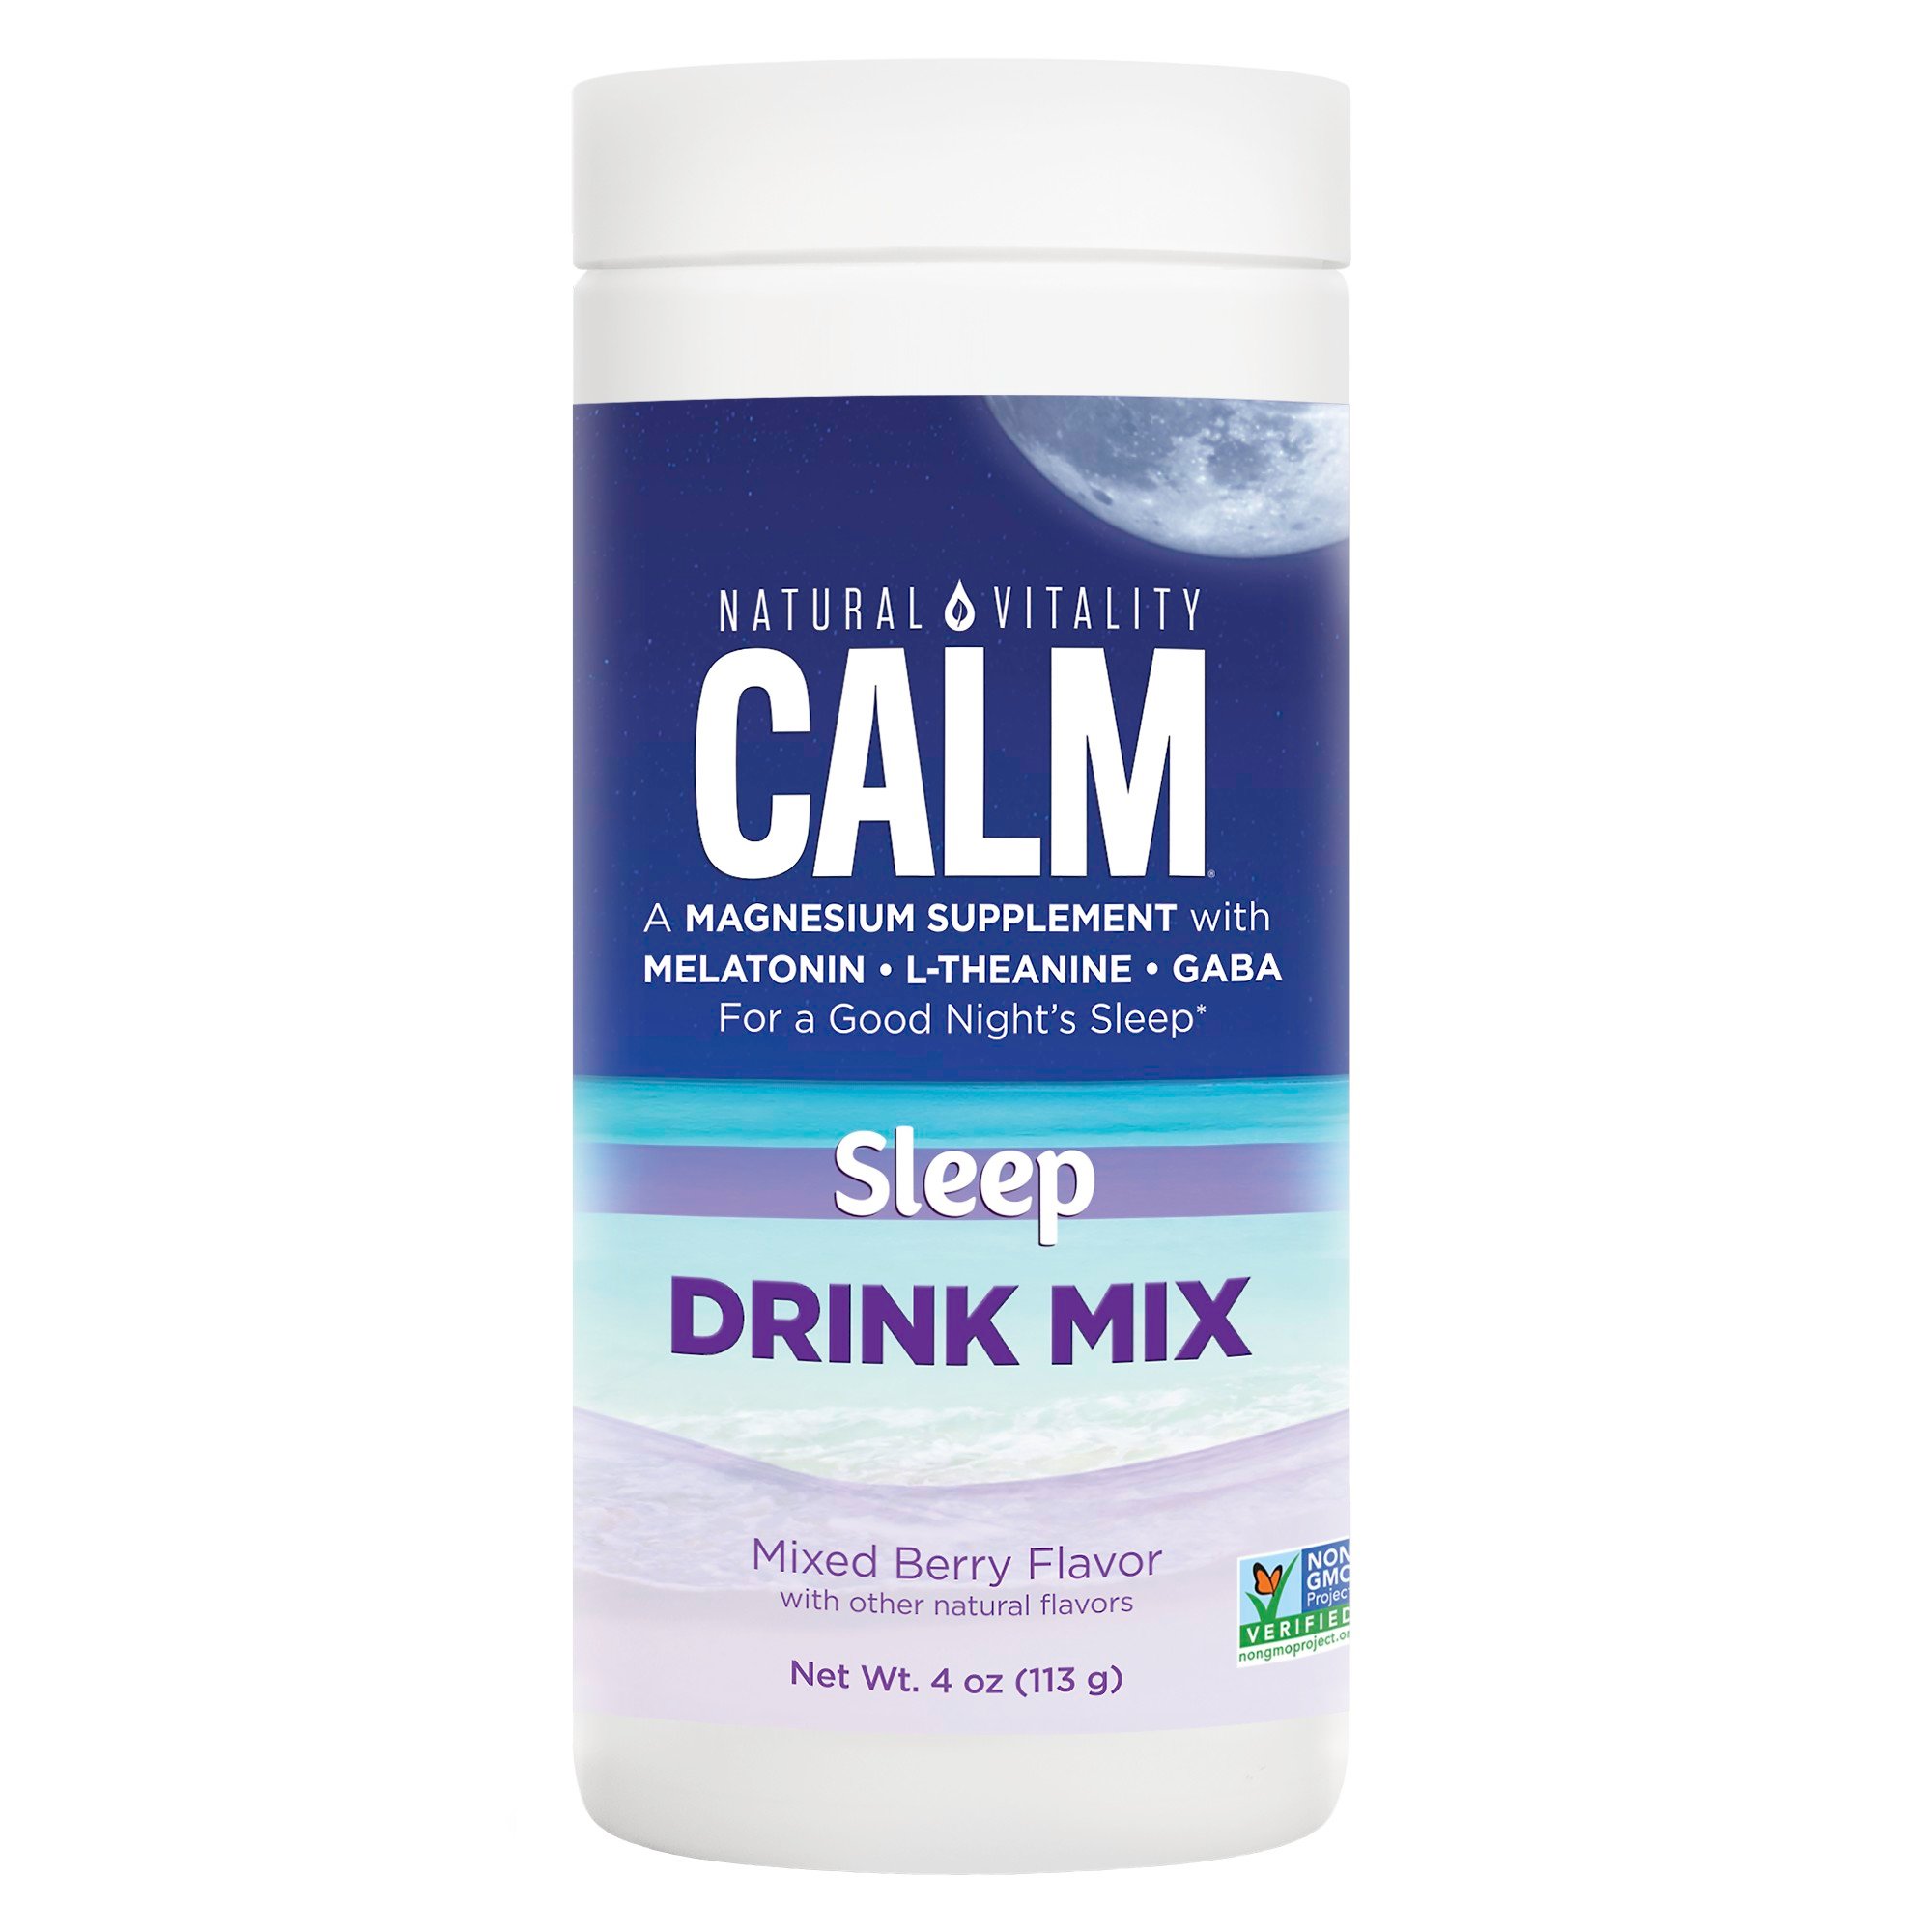 Natural Vitality Calm Sleep Drink Mix